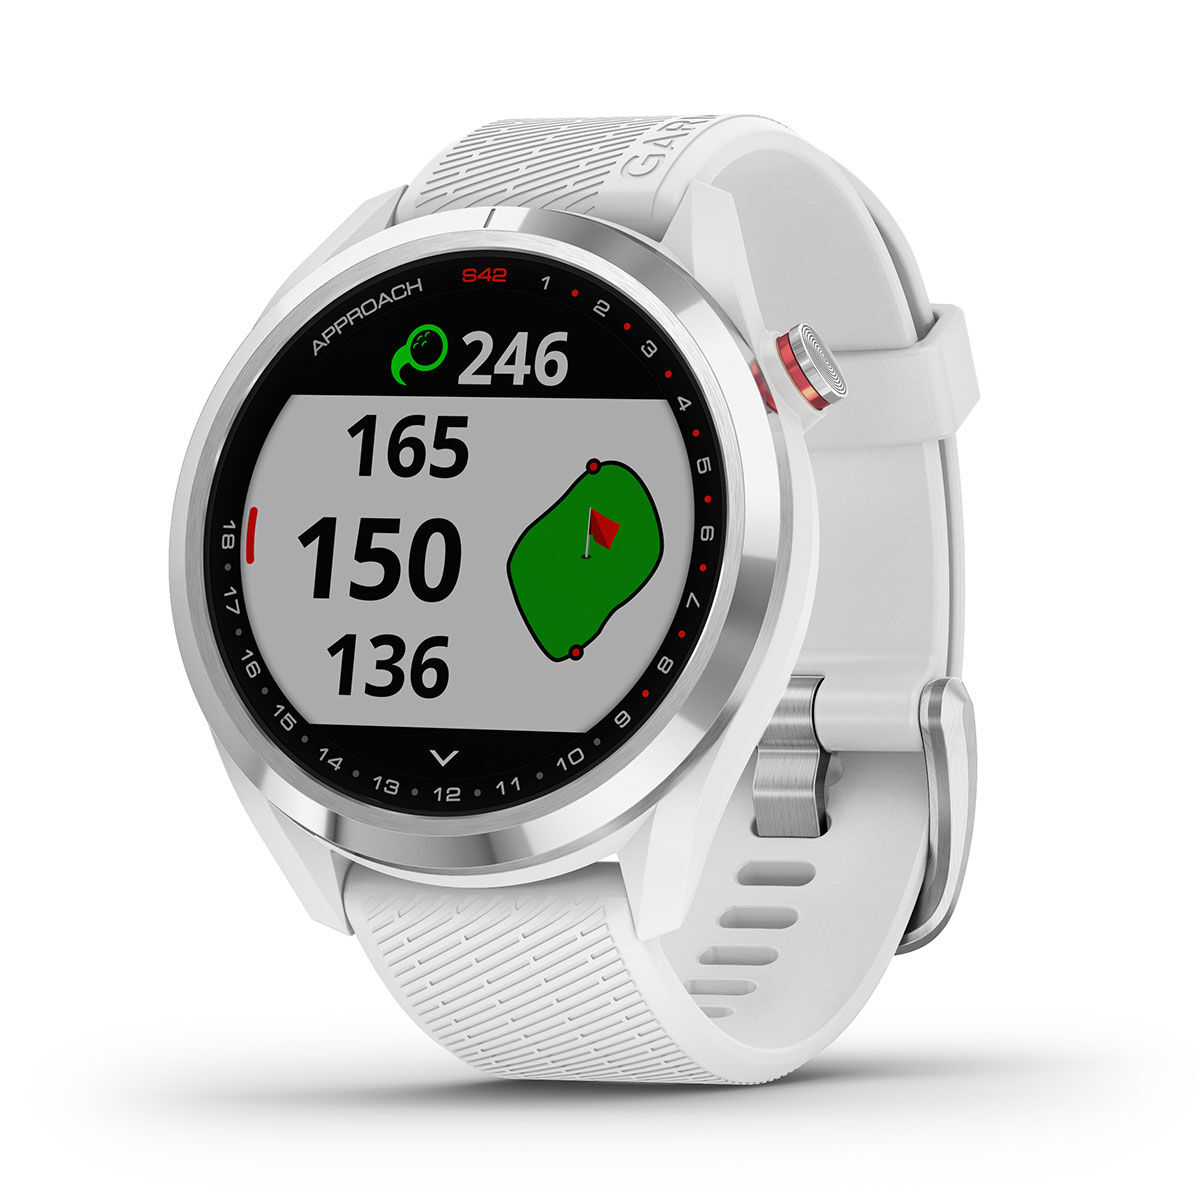 Garmin Golf GPS Watch, Silver and White Stylish Approach S42 | American Golf, One Size von Garmin